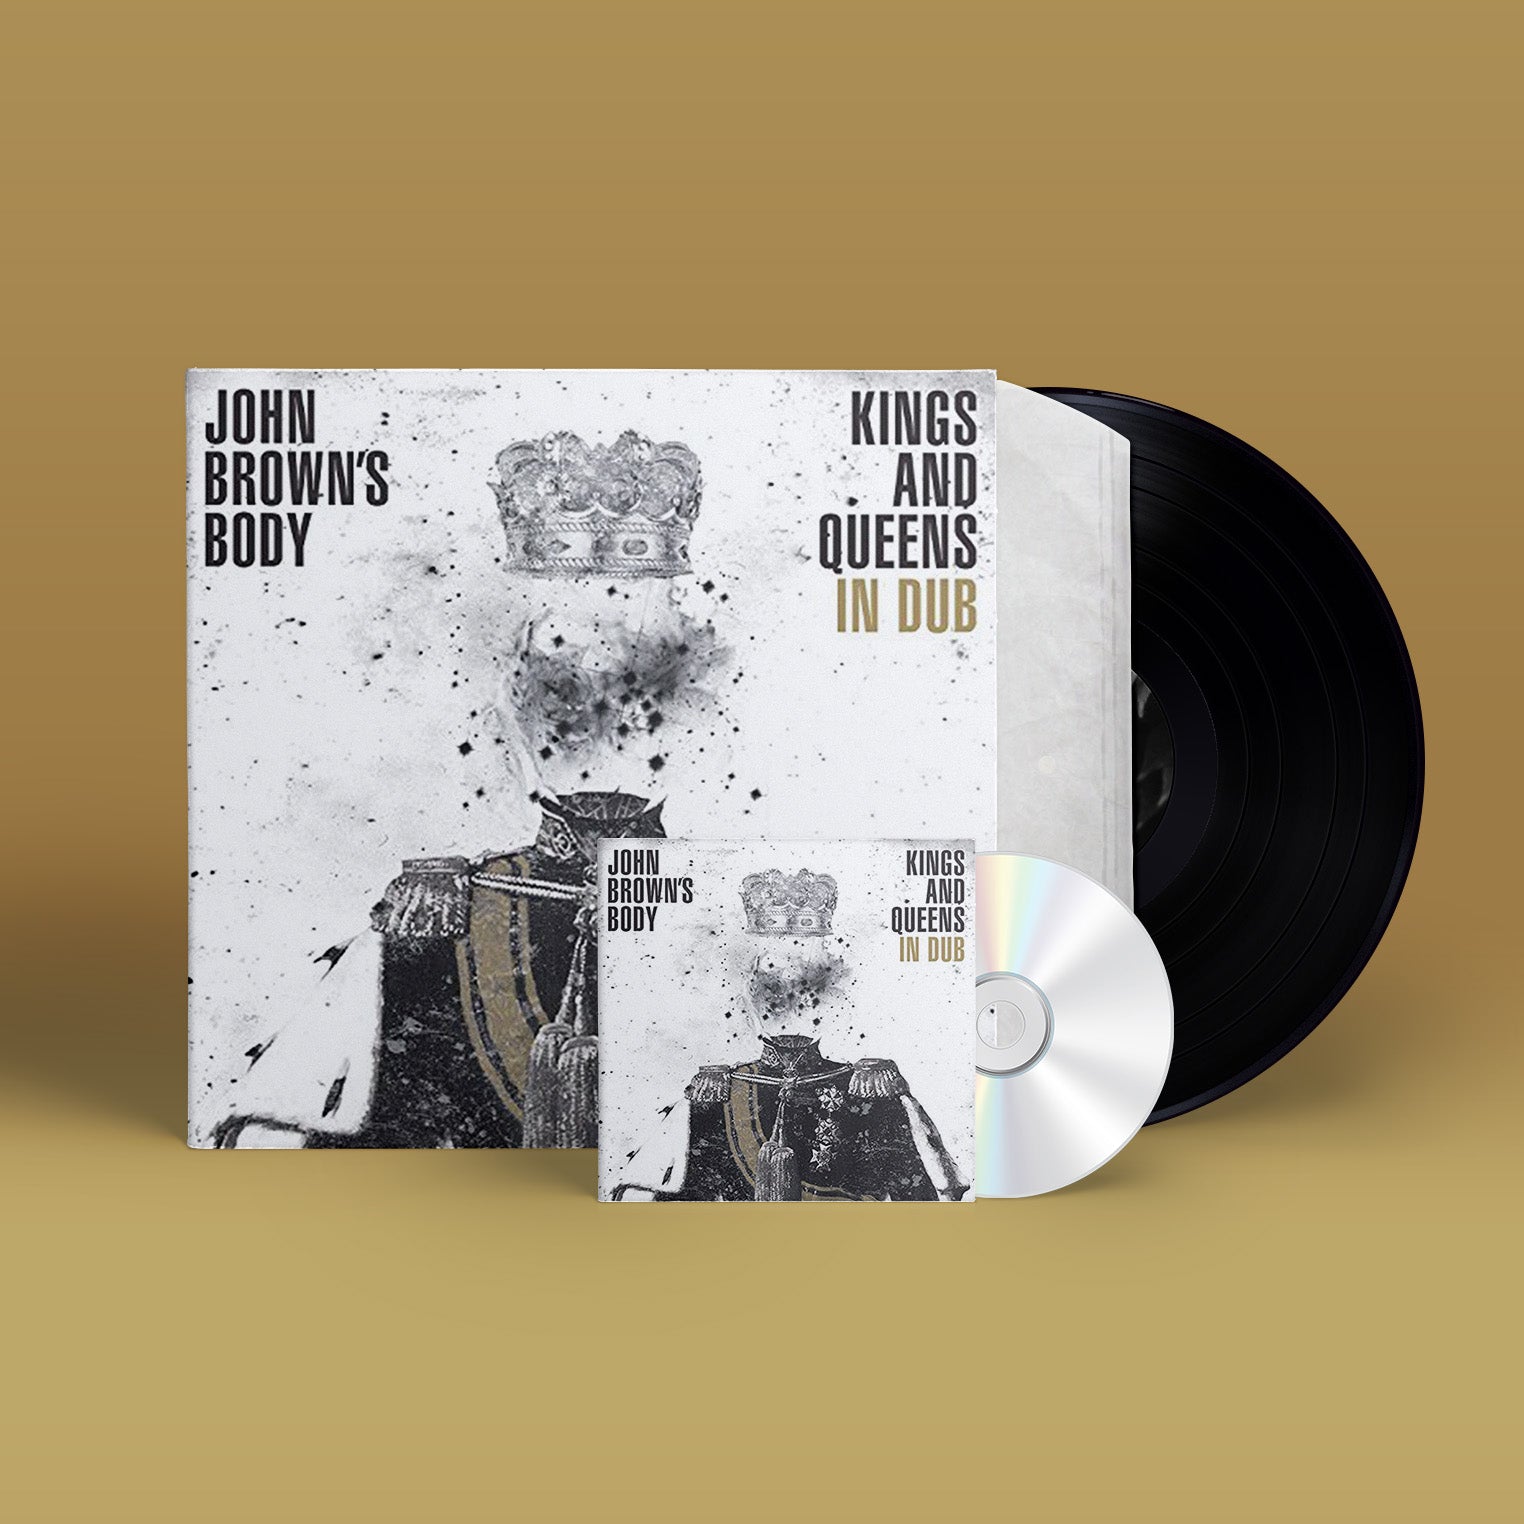 John Brown's Body - Kings & Queens in Dub